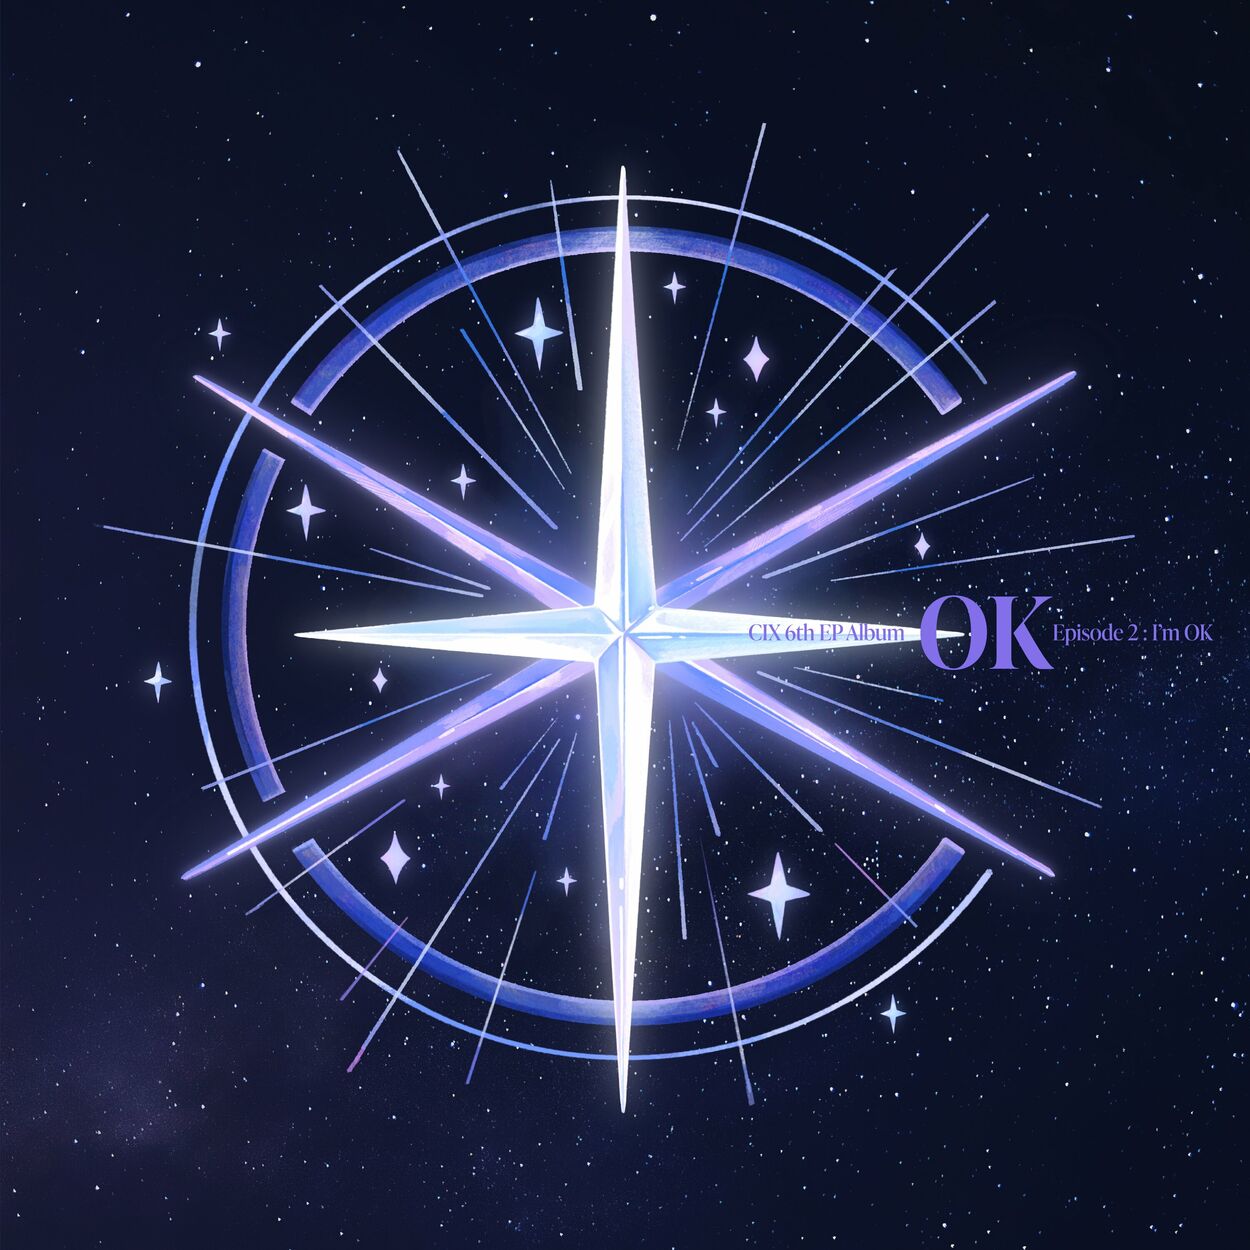 CIX – CIX 6th EP Album ‘OK’ Episode 2 : I’m OK